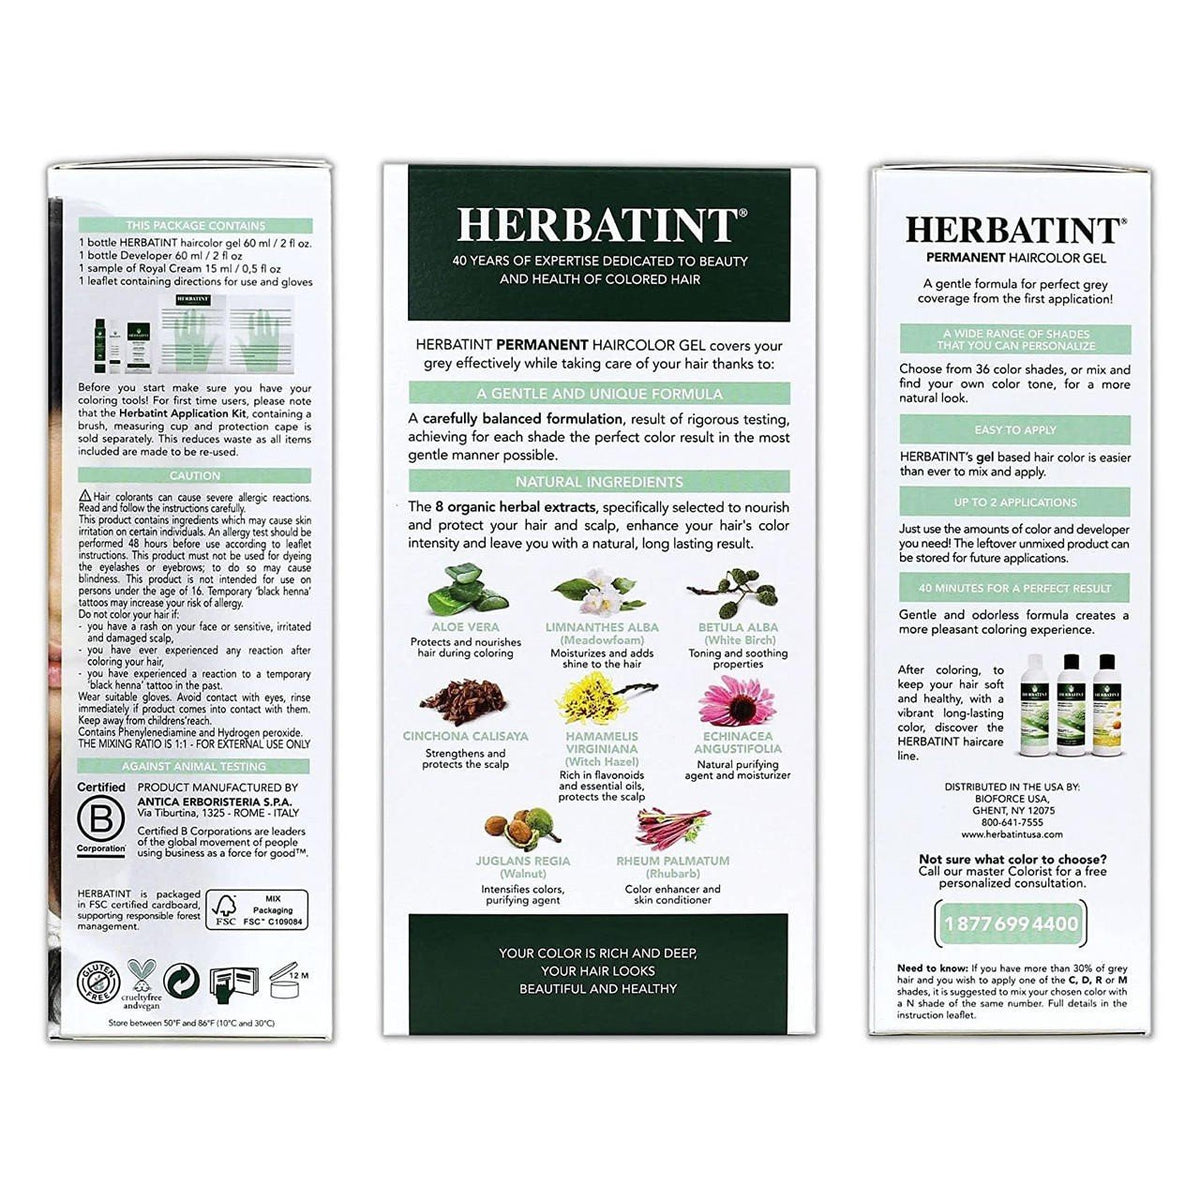 Herbatint FF6-Flash Fashion Orange-Permanent Hair Color Gel 4.56 fl oz Liquid